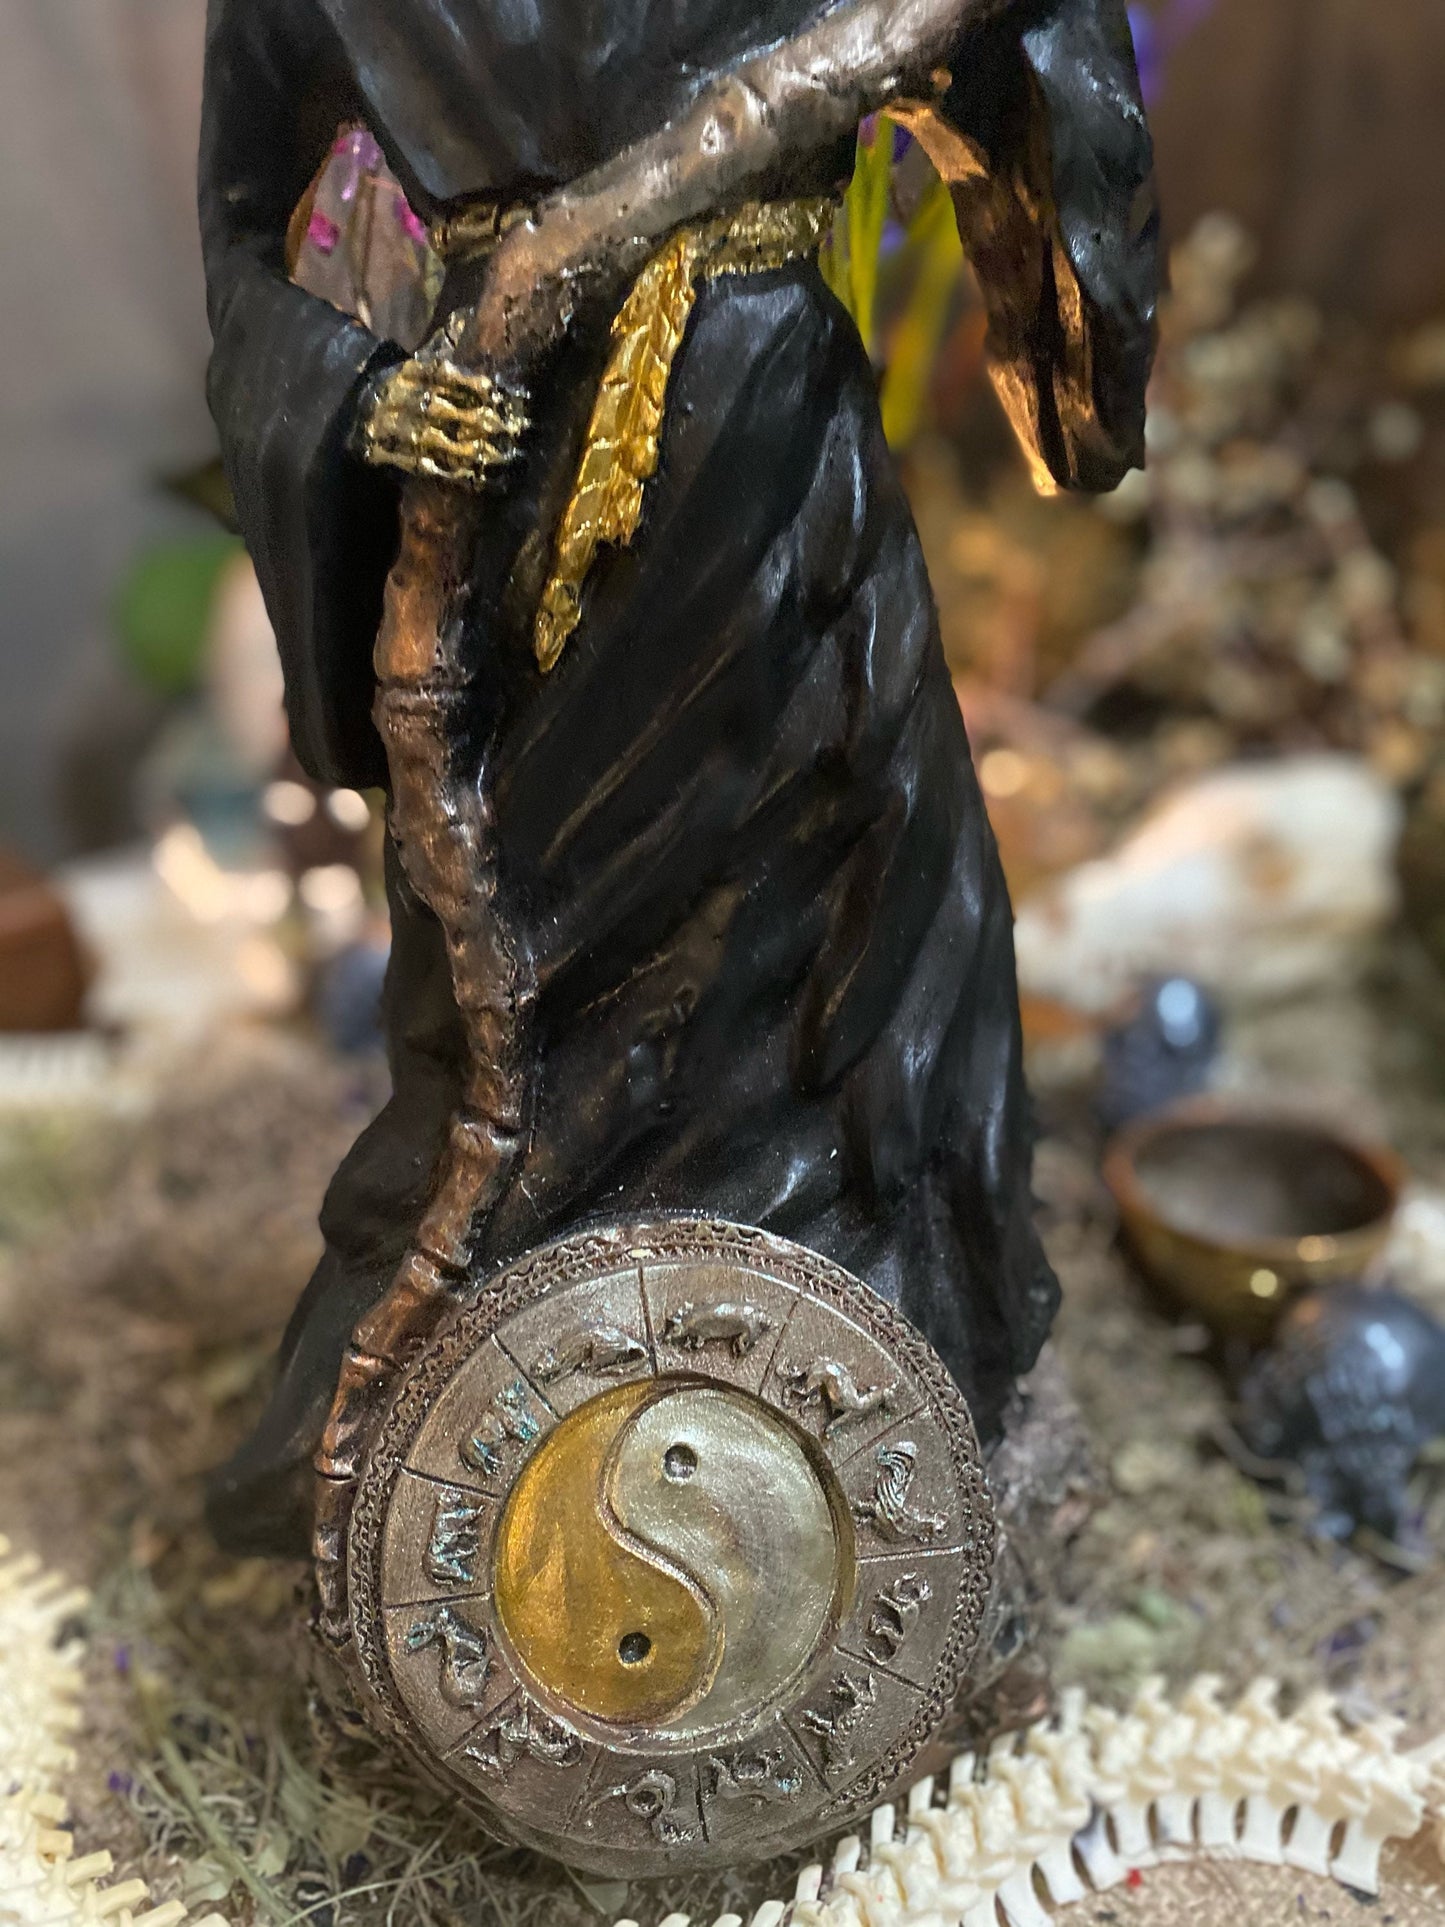 19” Santa Muerte Negra Yin Yang Statue + Baptized + Chinese Astrology + Planetary Magick + Fixed + Made in Mexico